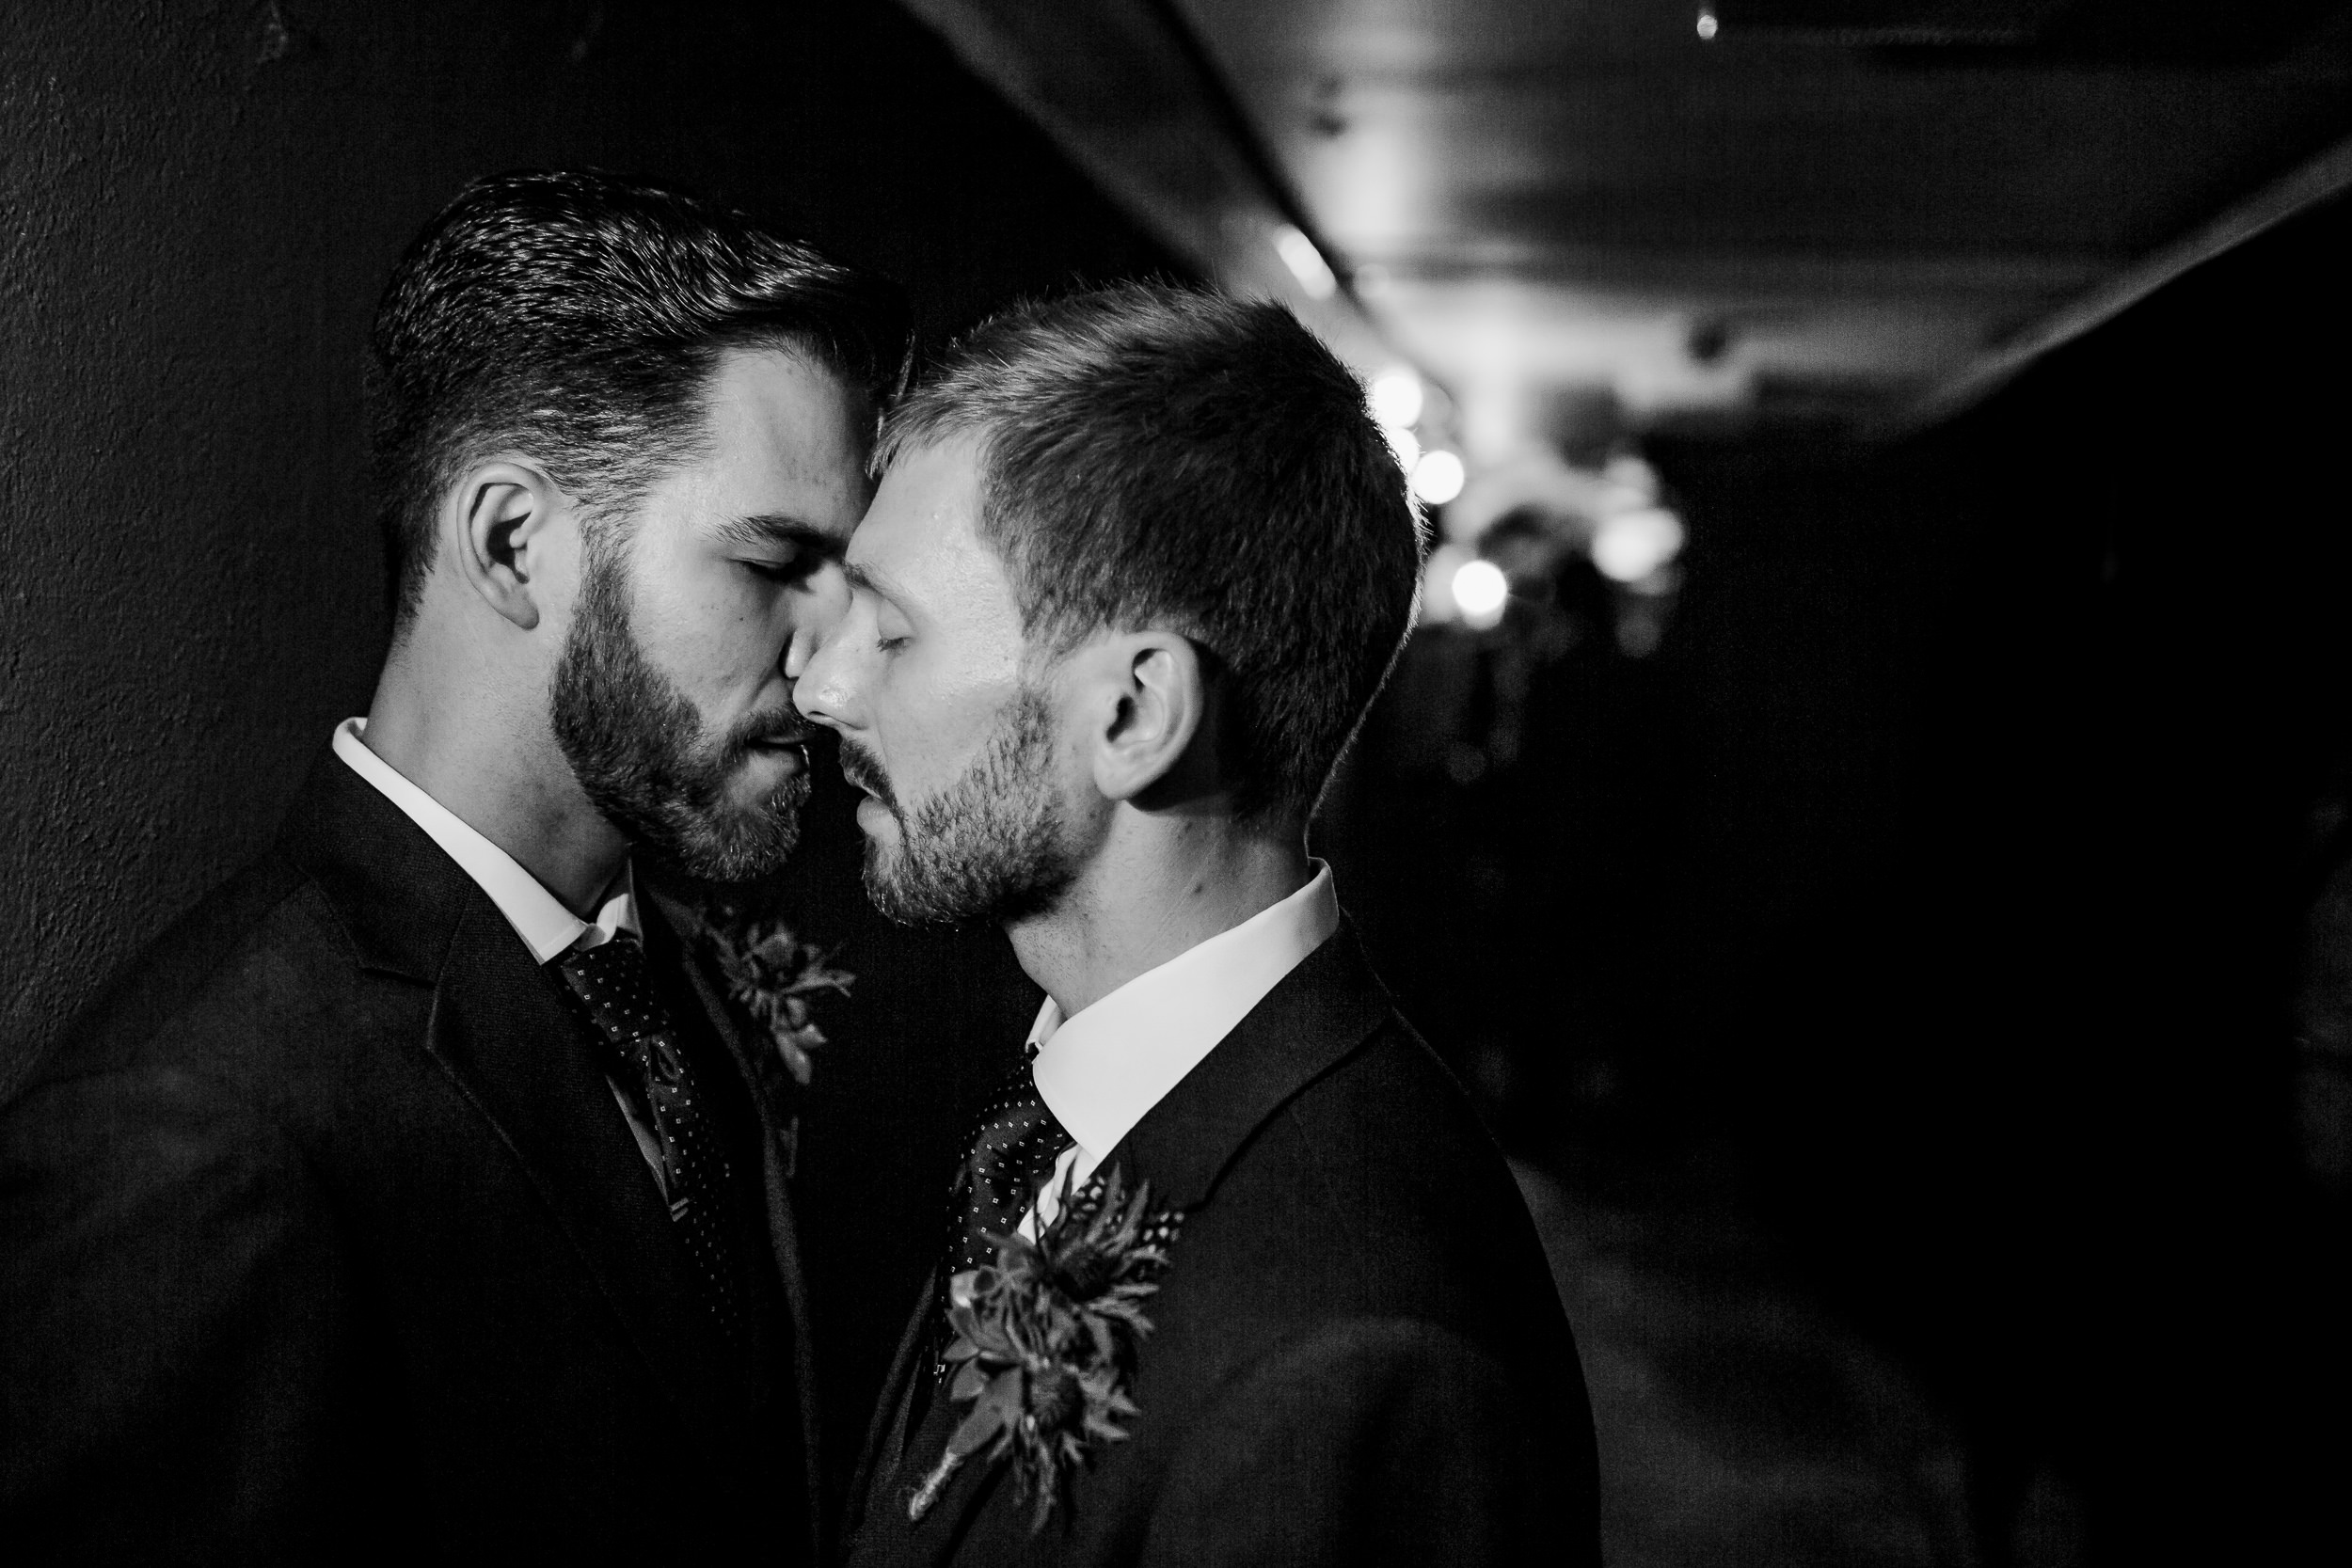 gay wedding kiss - LGBT wedding kiss - same sex wedding kiss - gay wedding photography